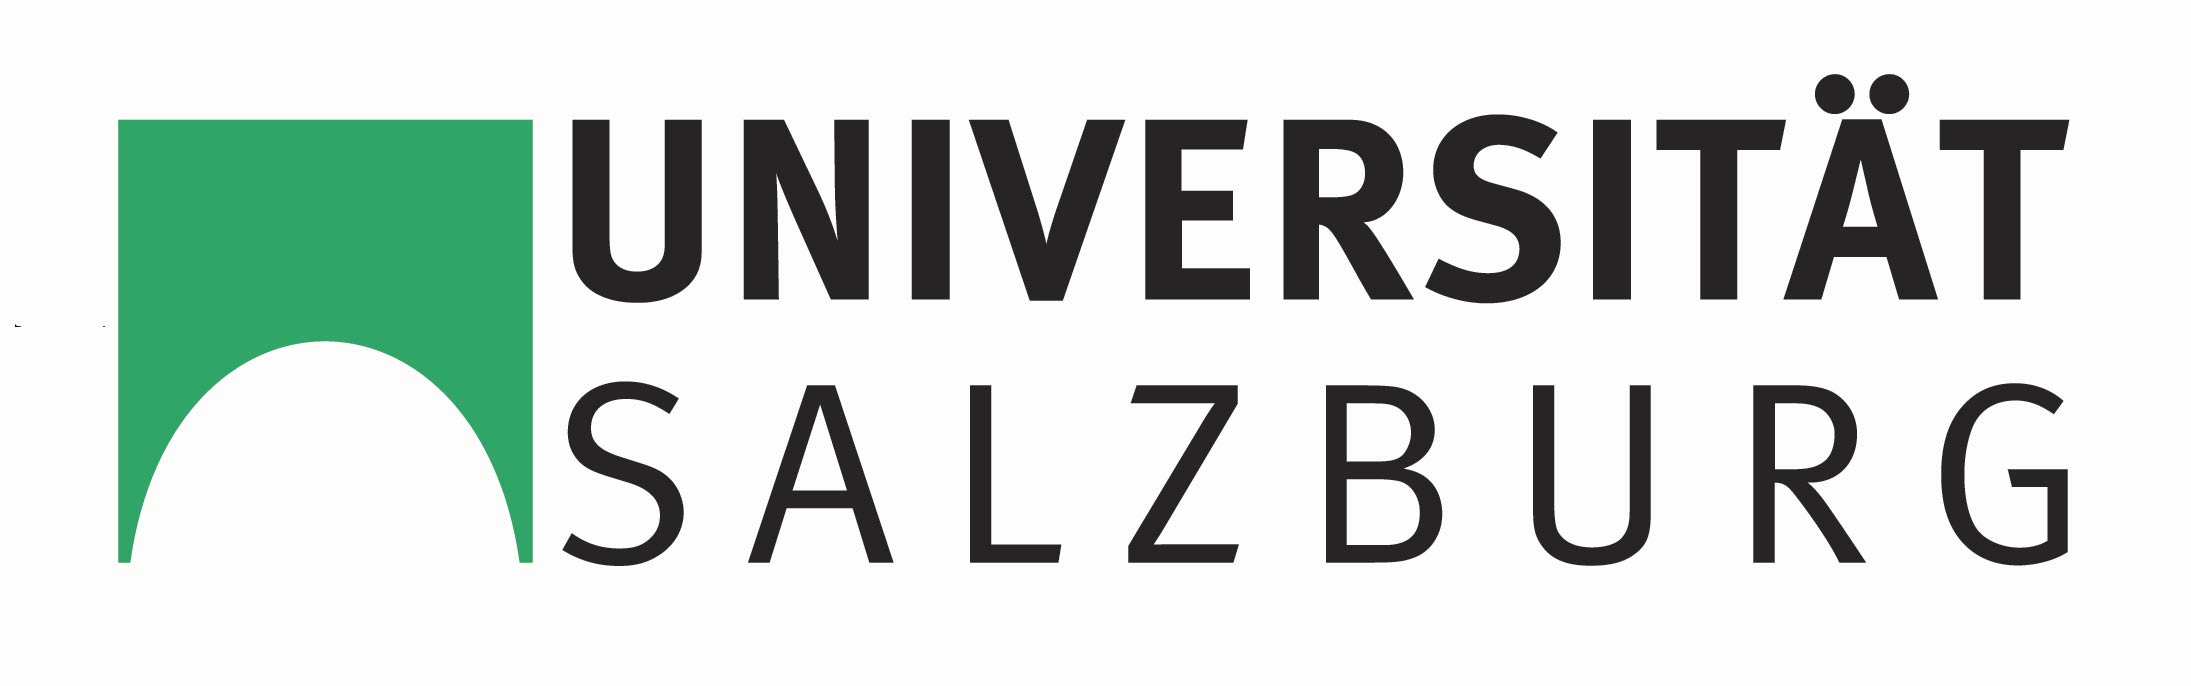 Universität Salzburg Logo photo - 1